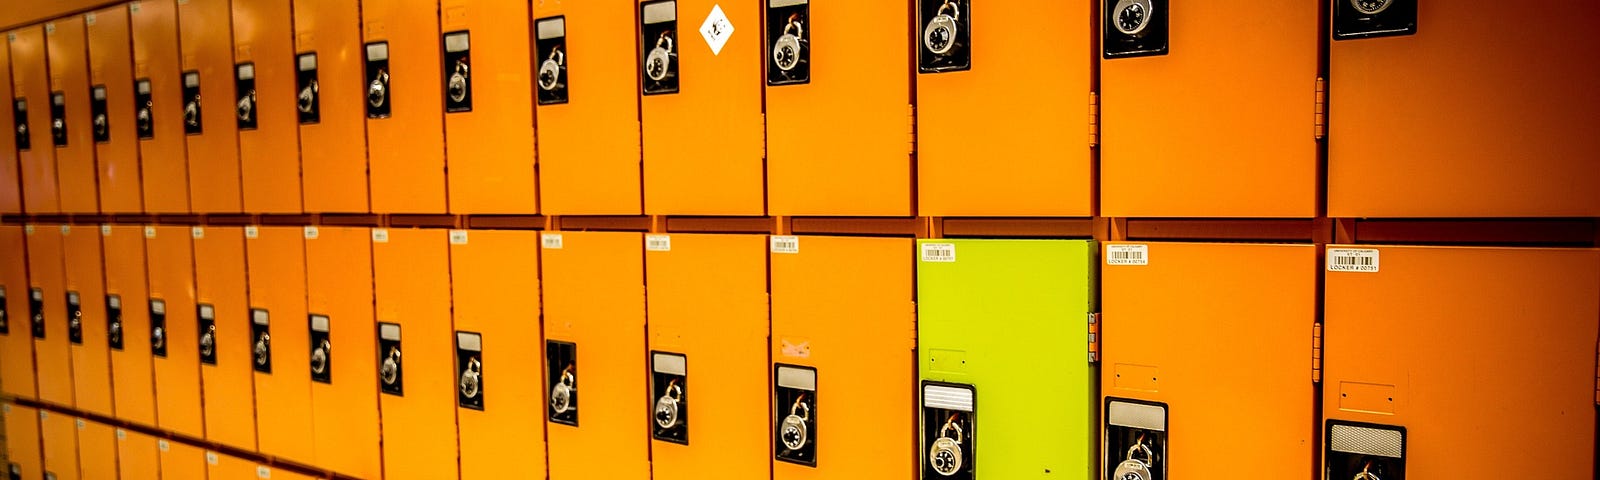 Identical orange lockers with one yellow locker.